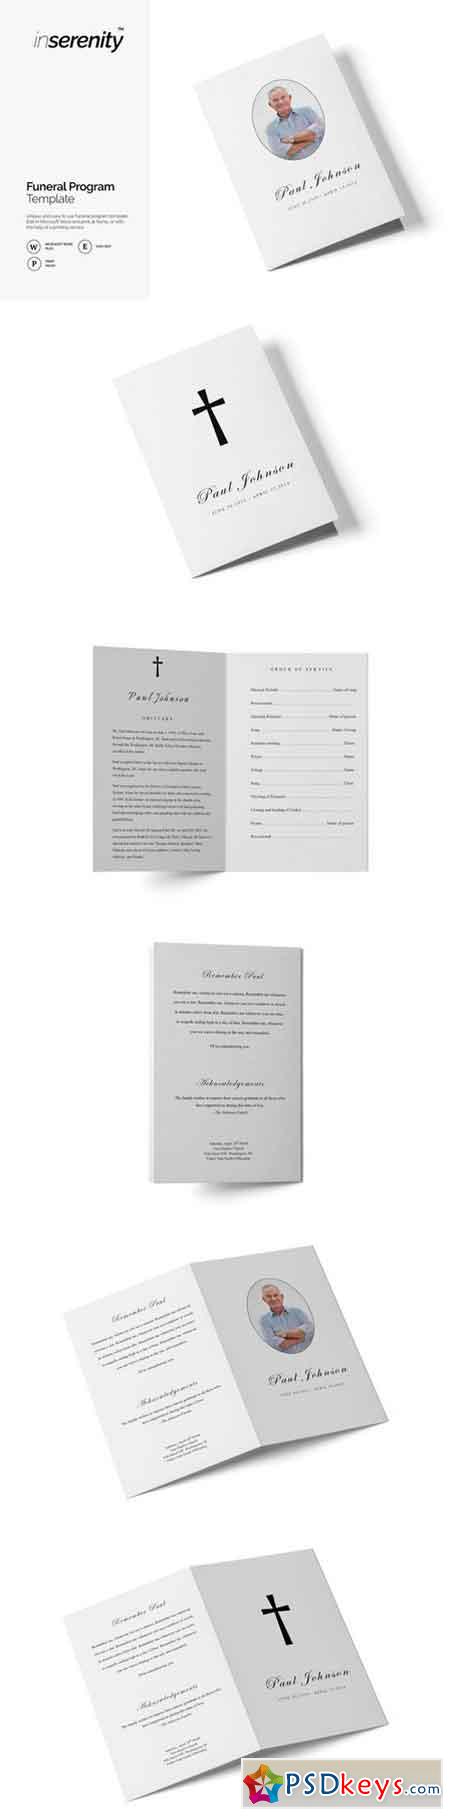 Funeral program template BI-fold 1825923